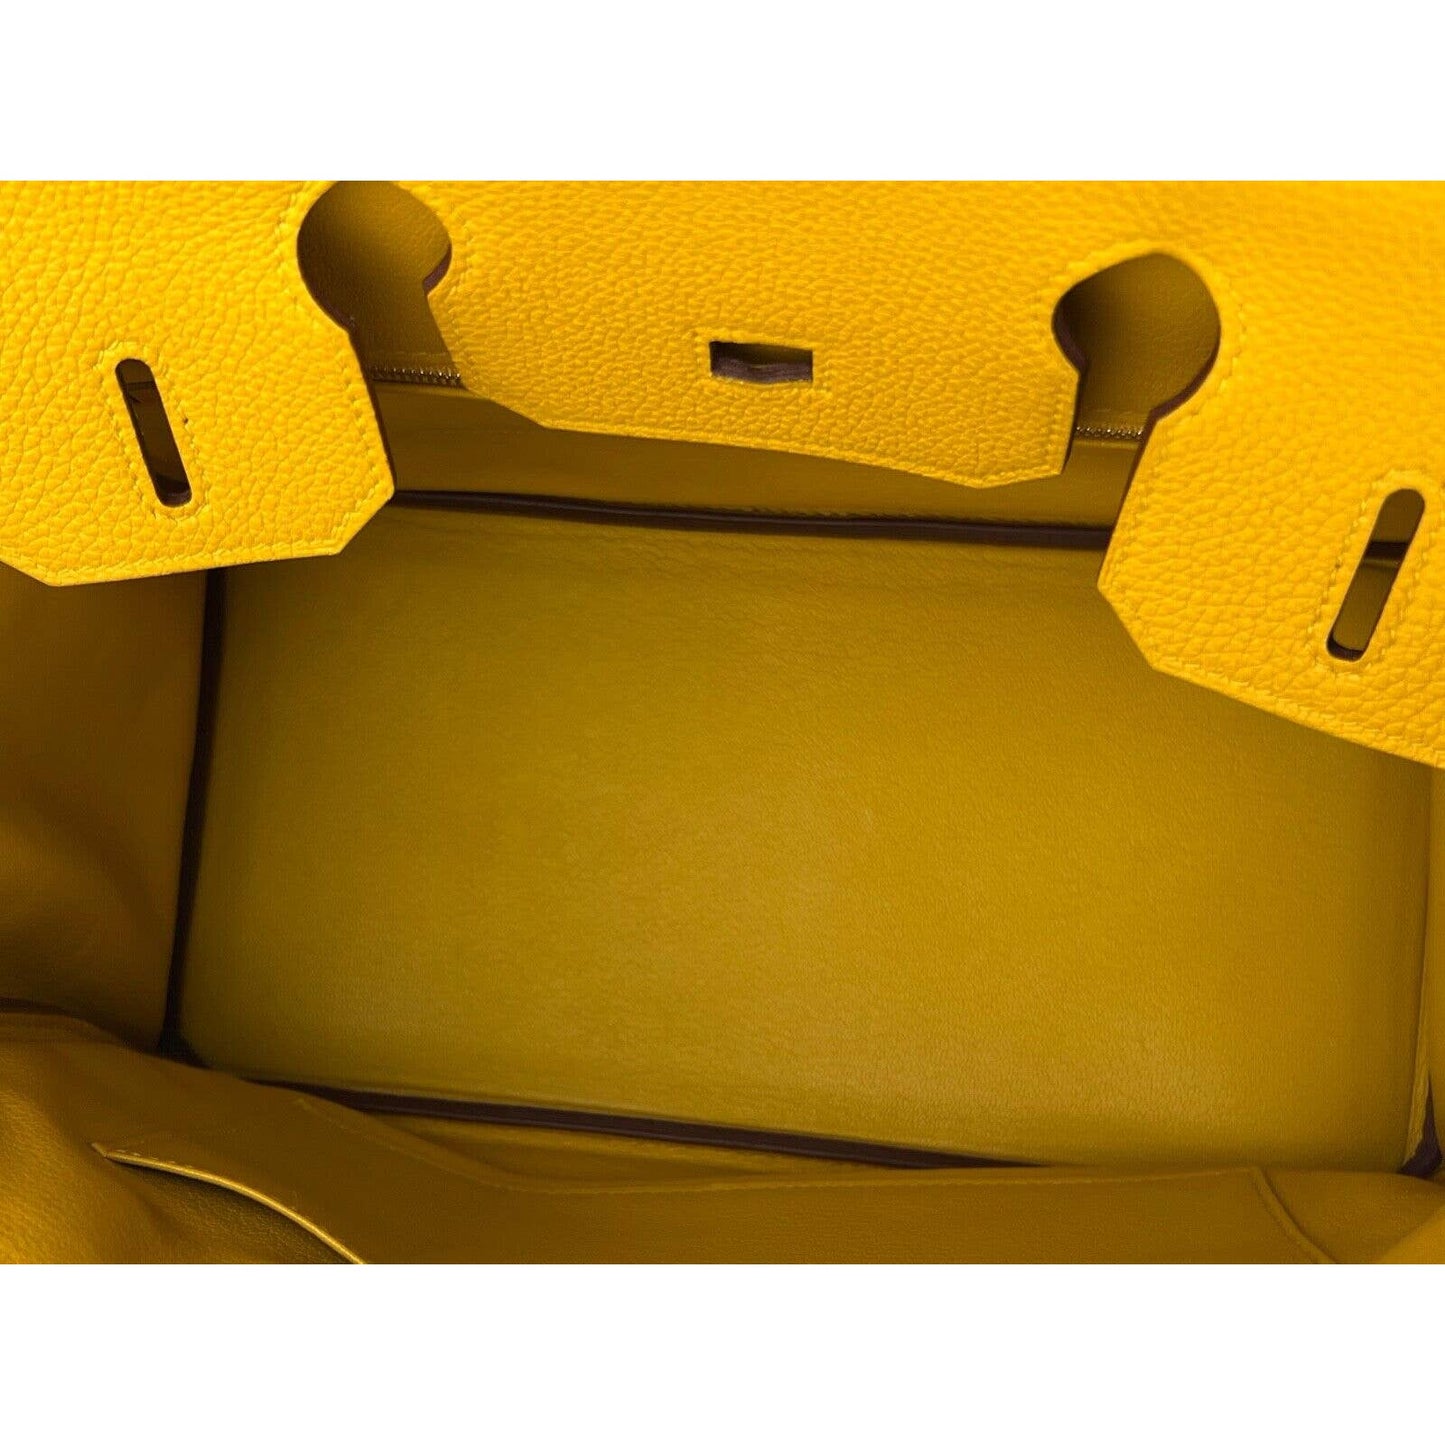 Hermès Birkin 30 Jaune Ambre Yellow Togo Leather Gold Hardware Handbag Bag